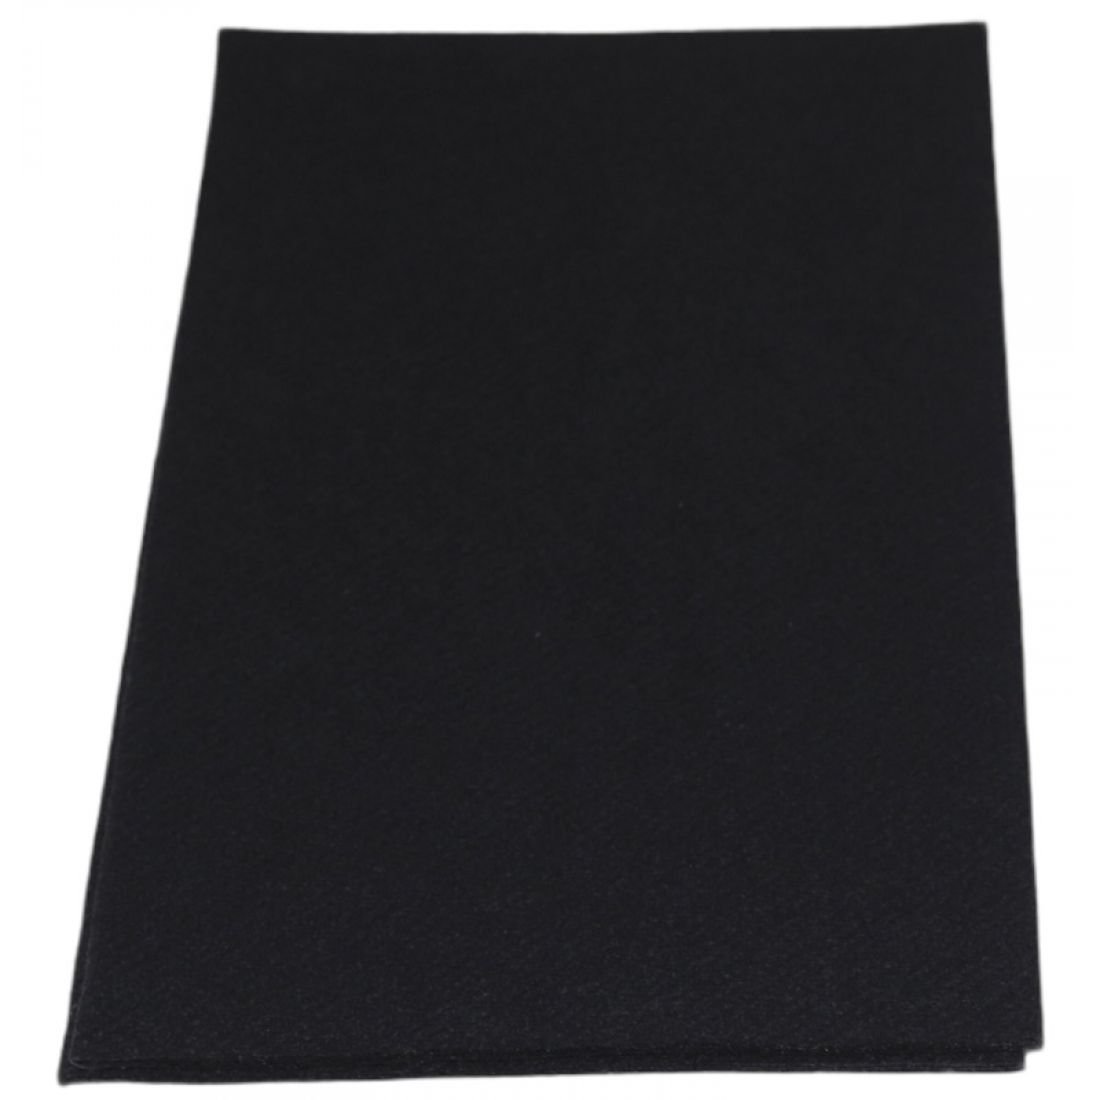 Airlaid : Black 40cm 8-Fold Linen Feel Luxury Airlaid Paper ...